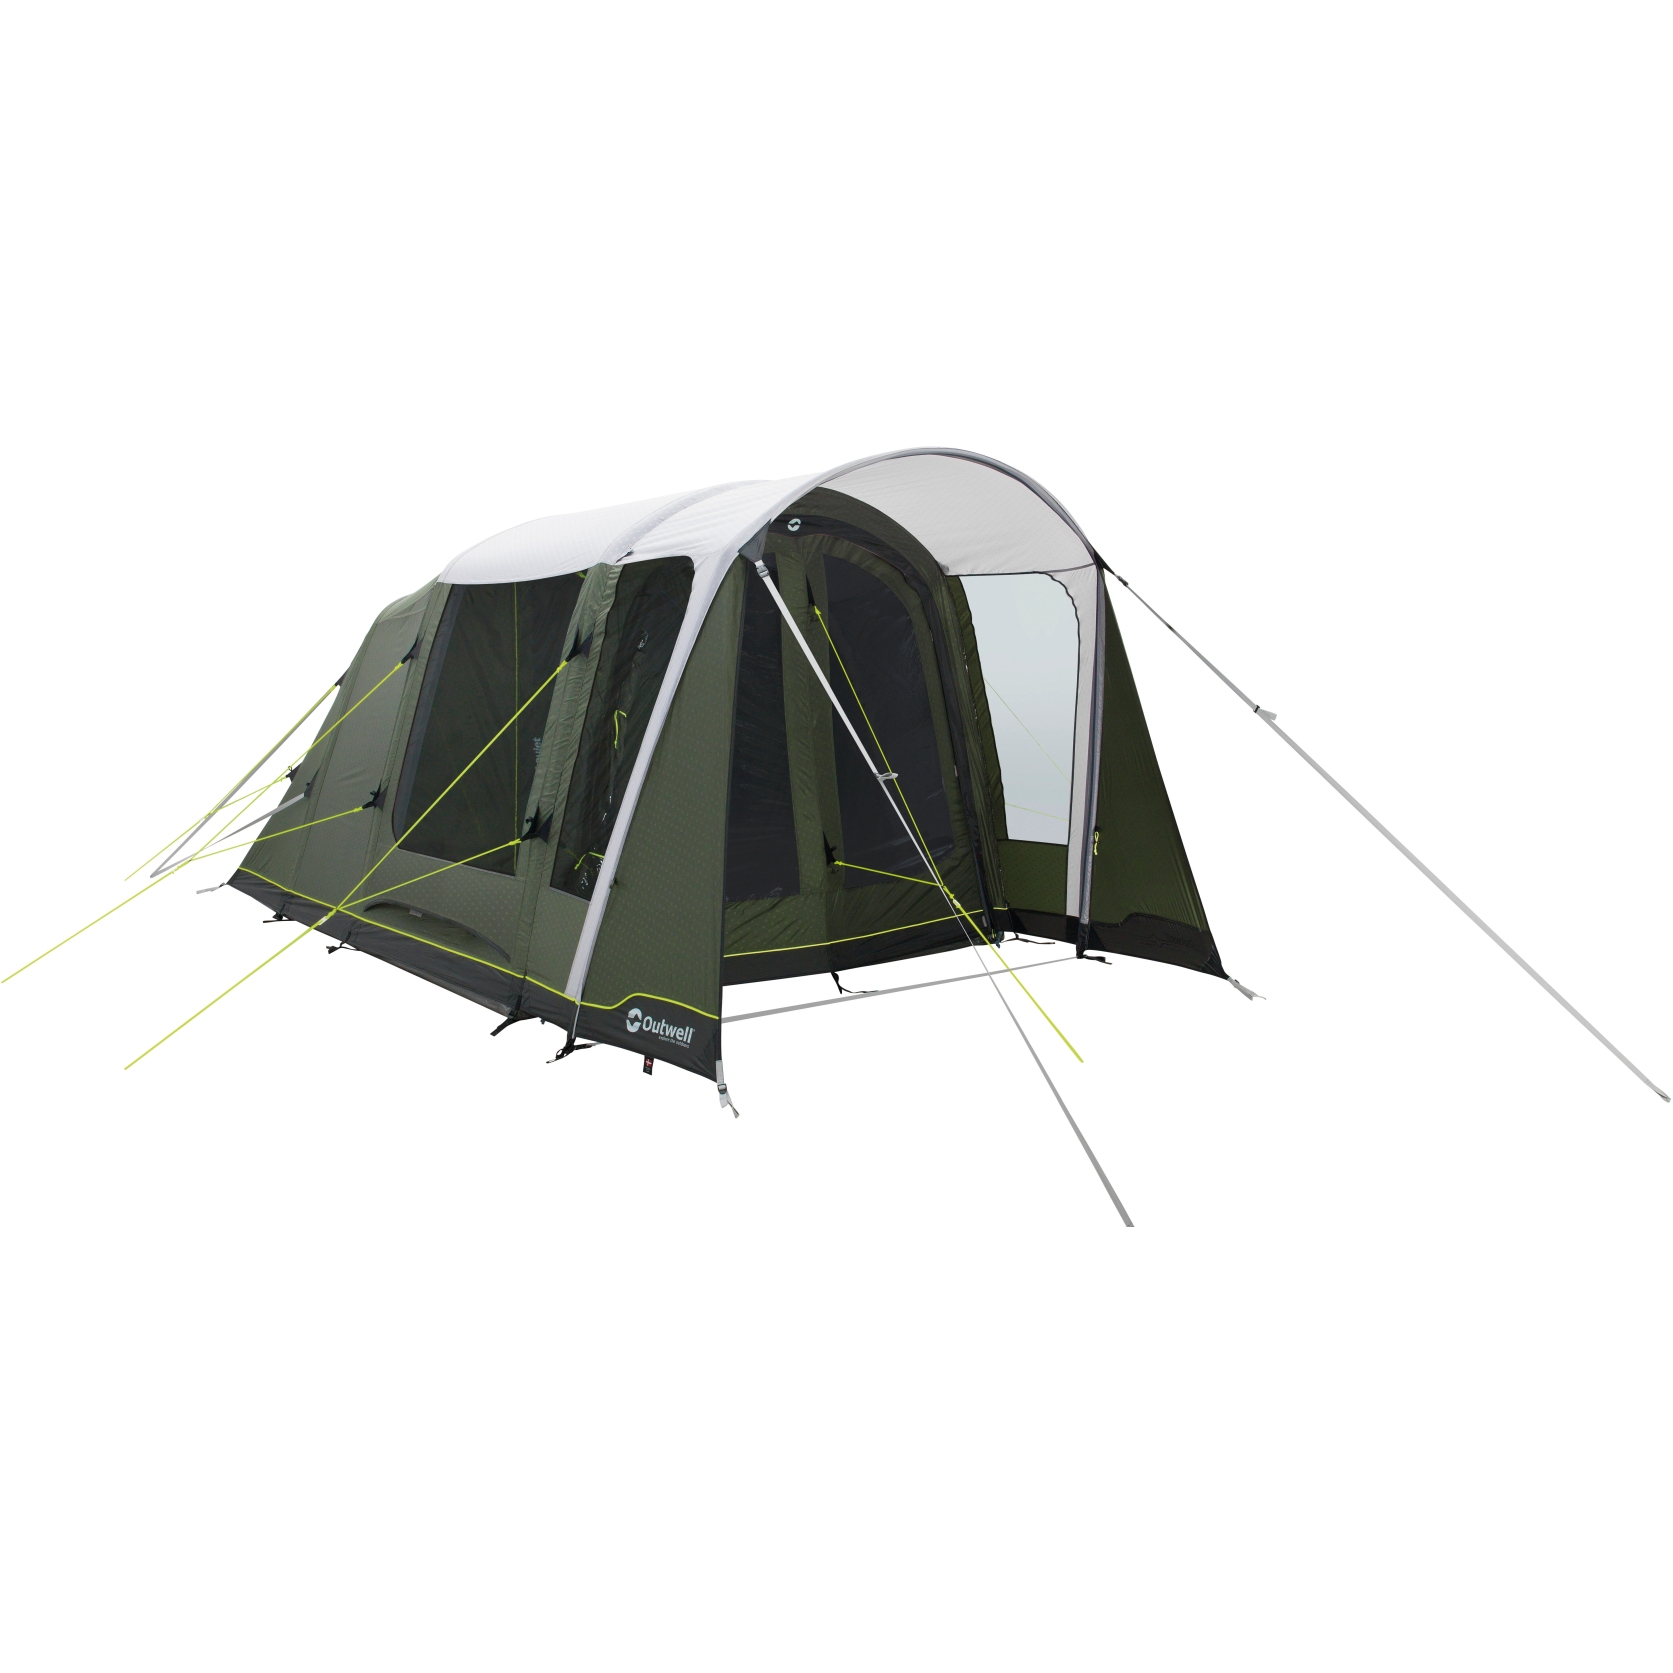 Productfoto van Outwell Elmdale 3PA Tent - Groen